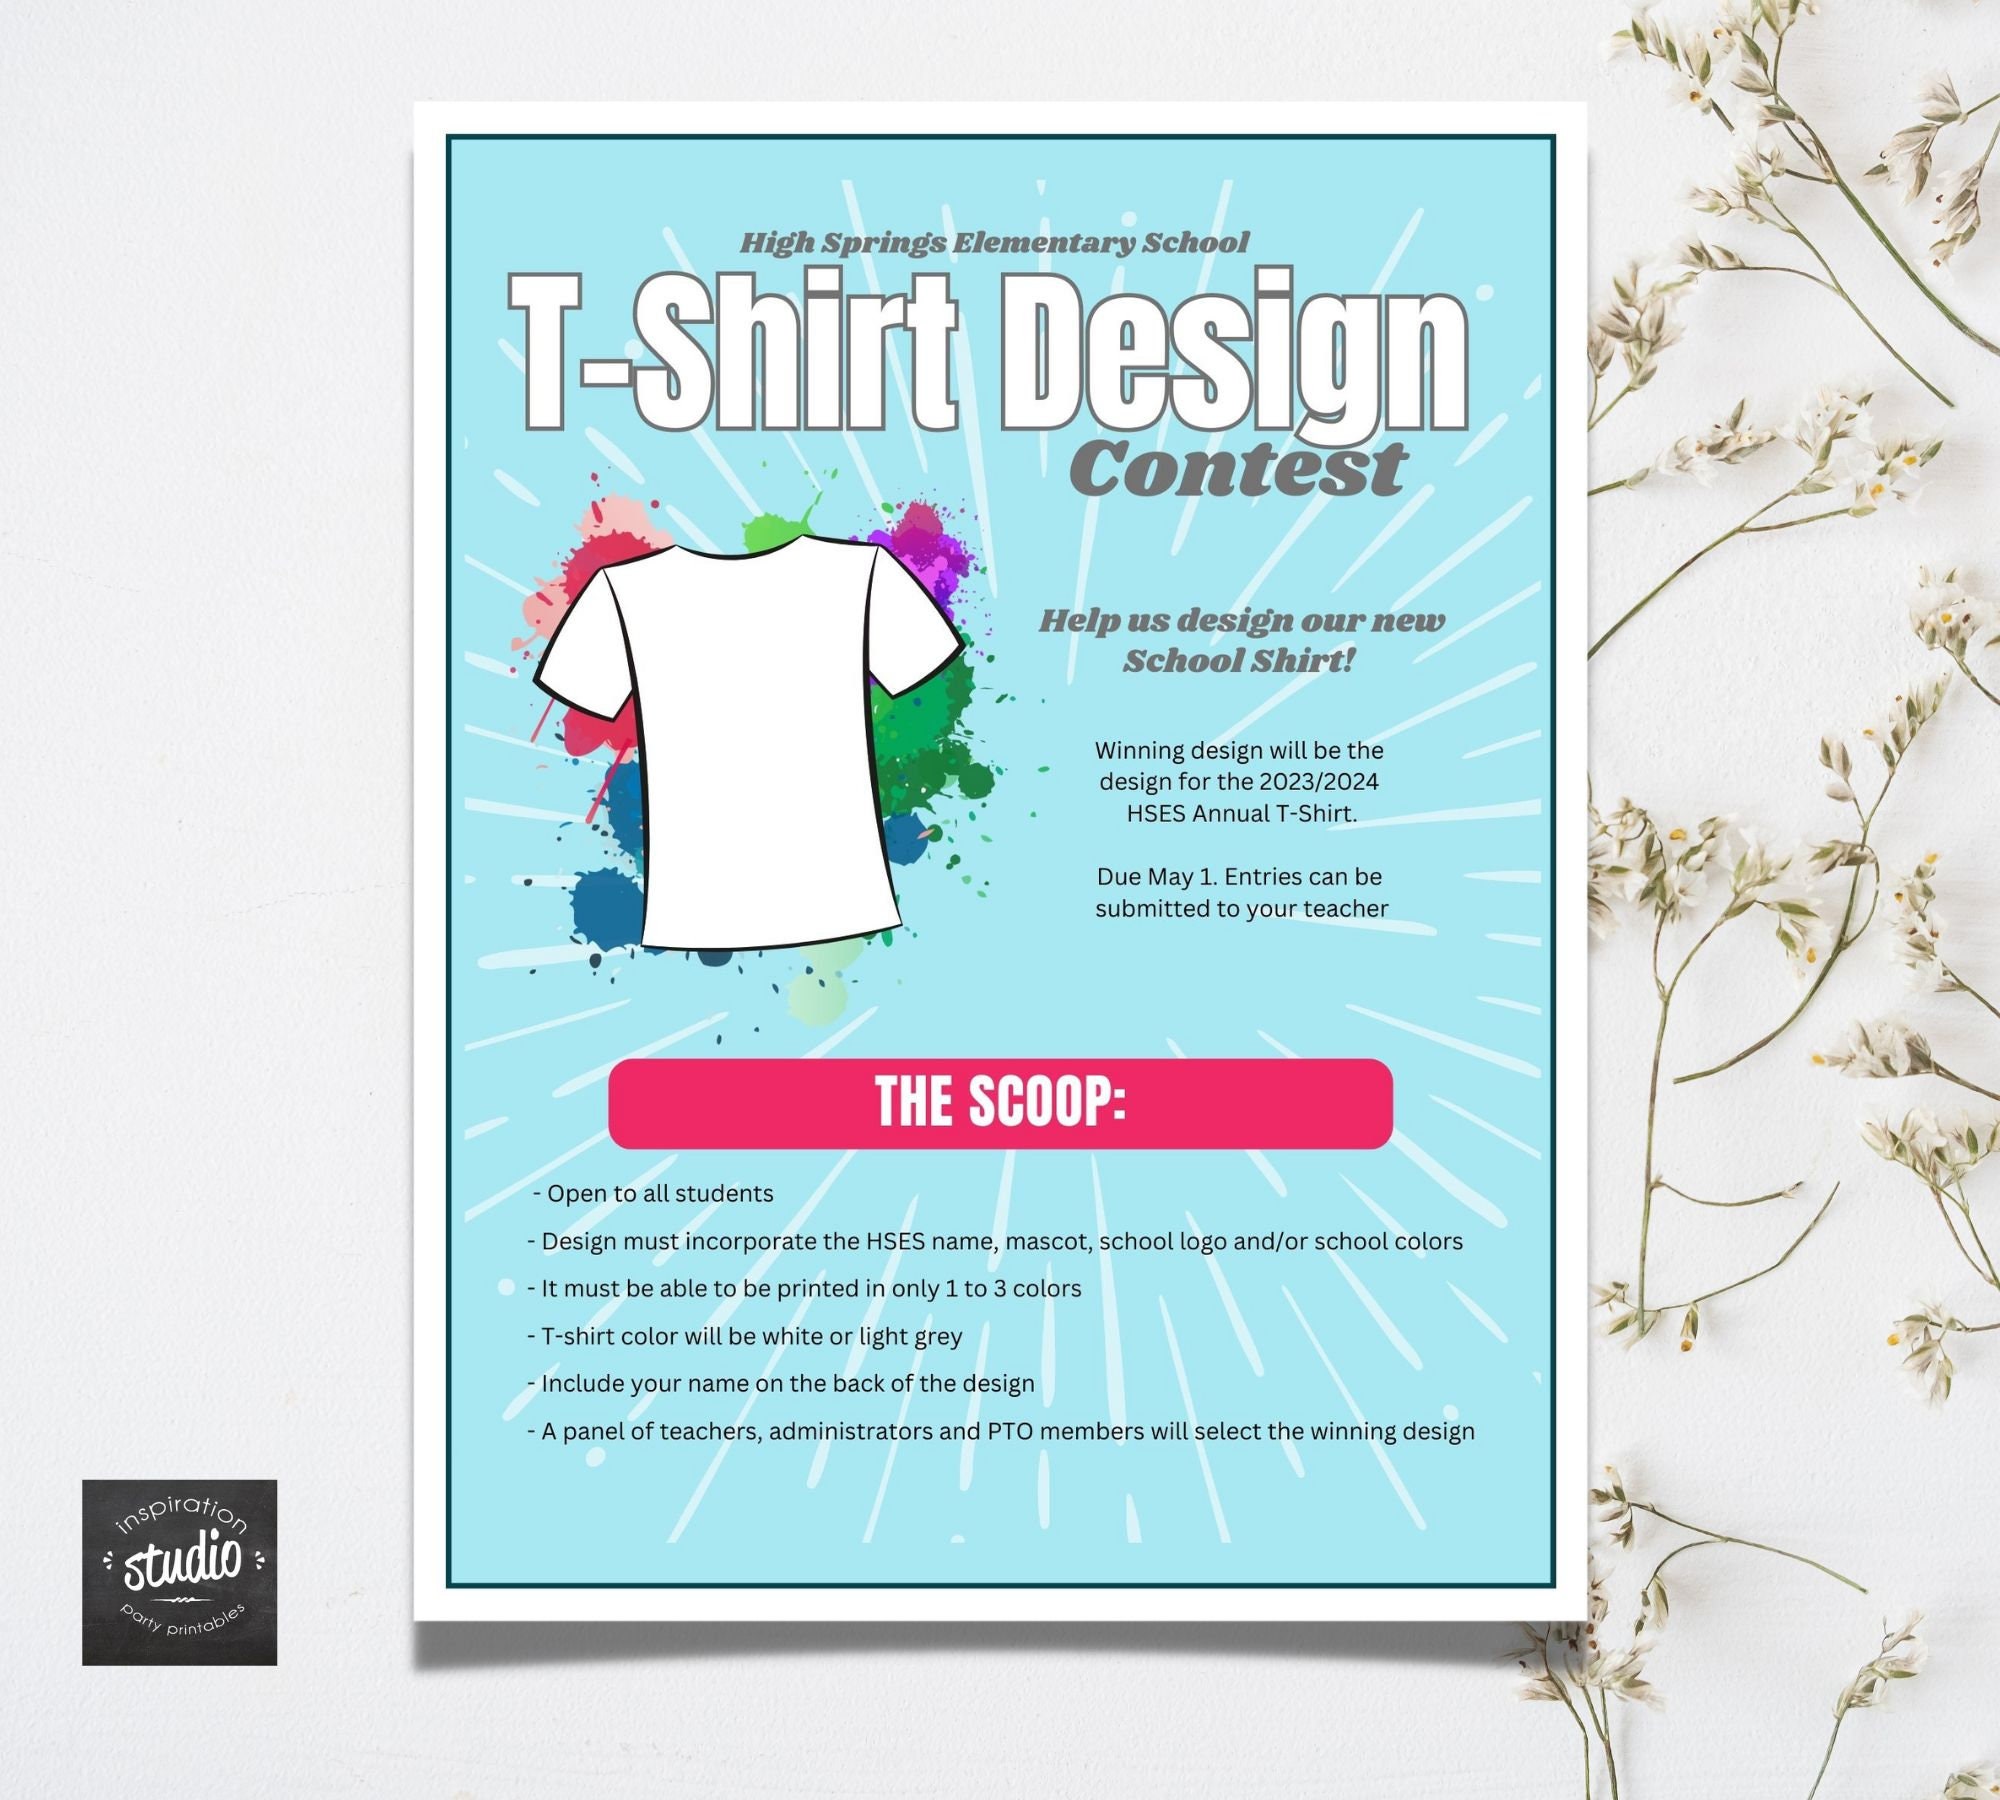 T-shirt Flyer Graphics, Designs & Templates